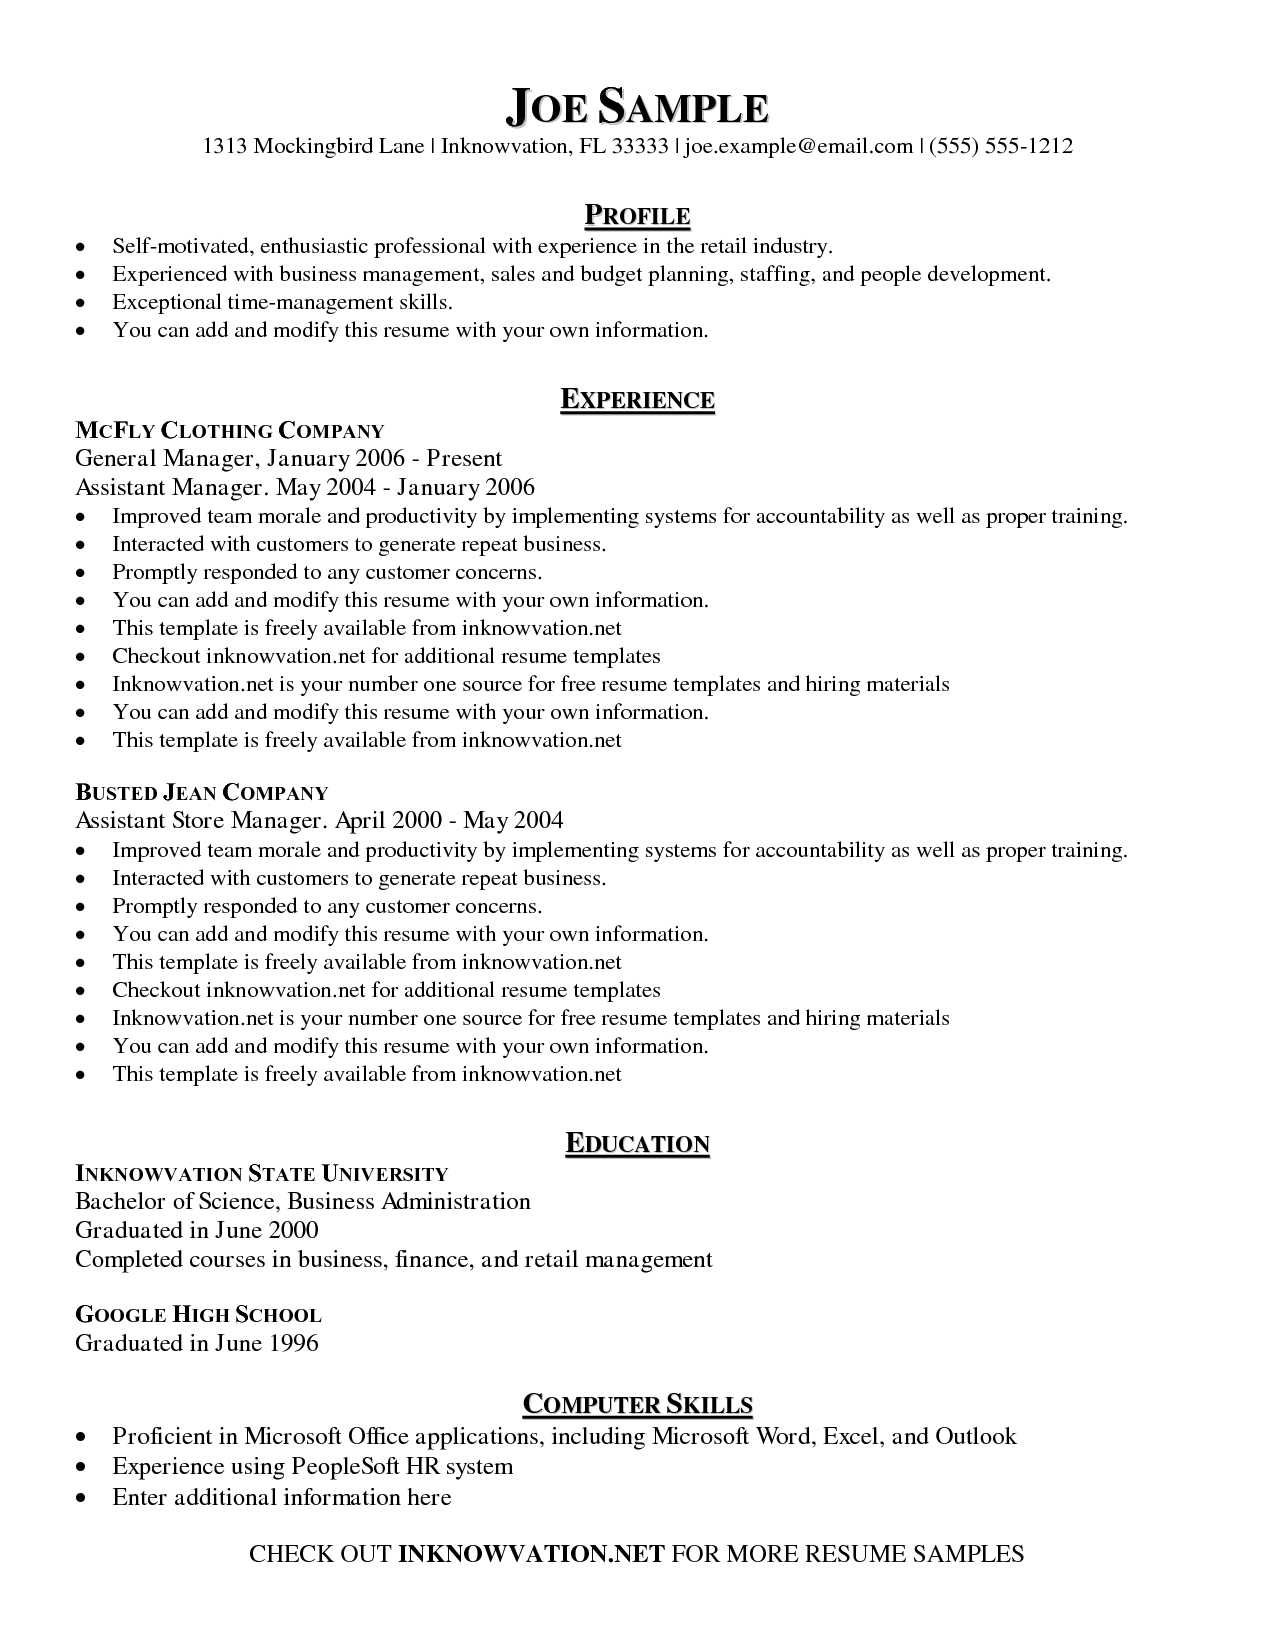 Printable Sample Resume | Room Surf Within Free Printable Resume Templates Microsoft Word